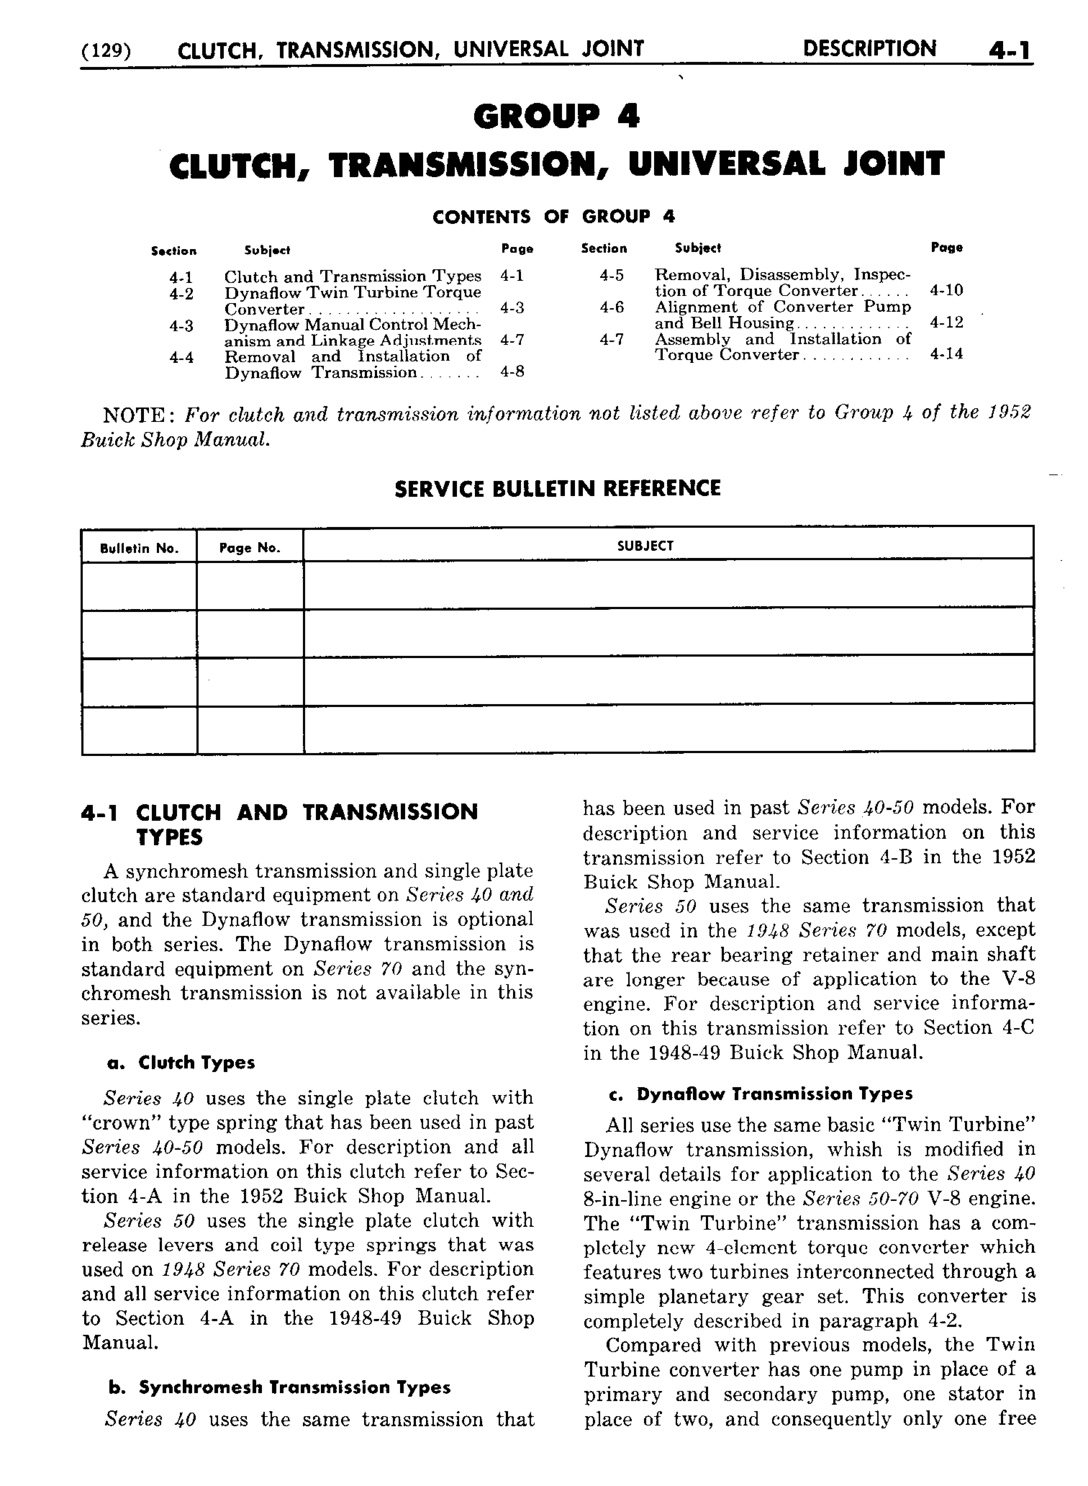 n_05 1953 Buick Shop Manual - Transmission-001-001.jpg